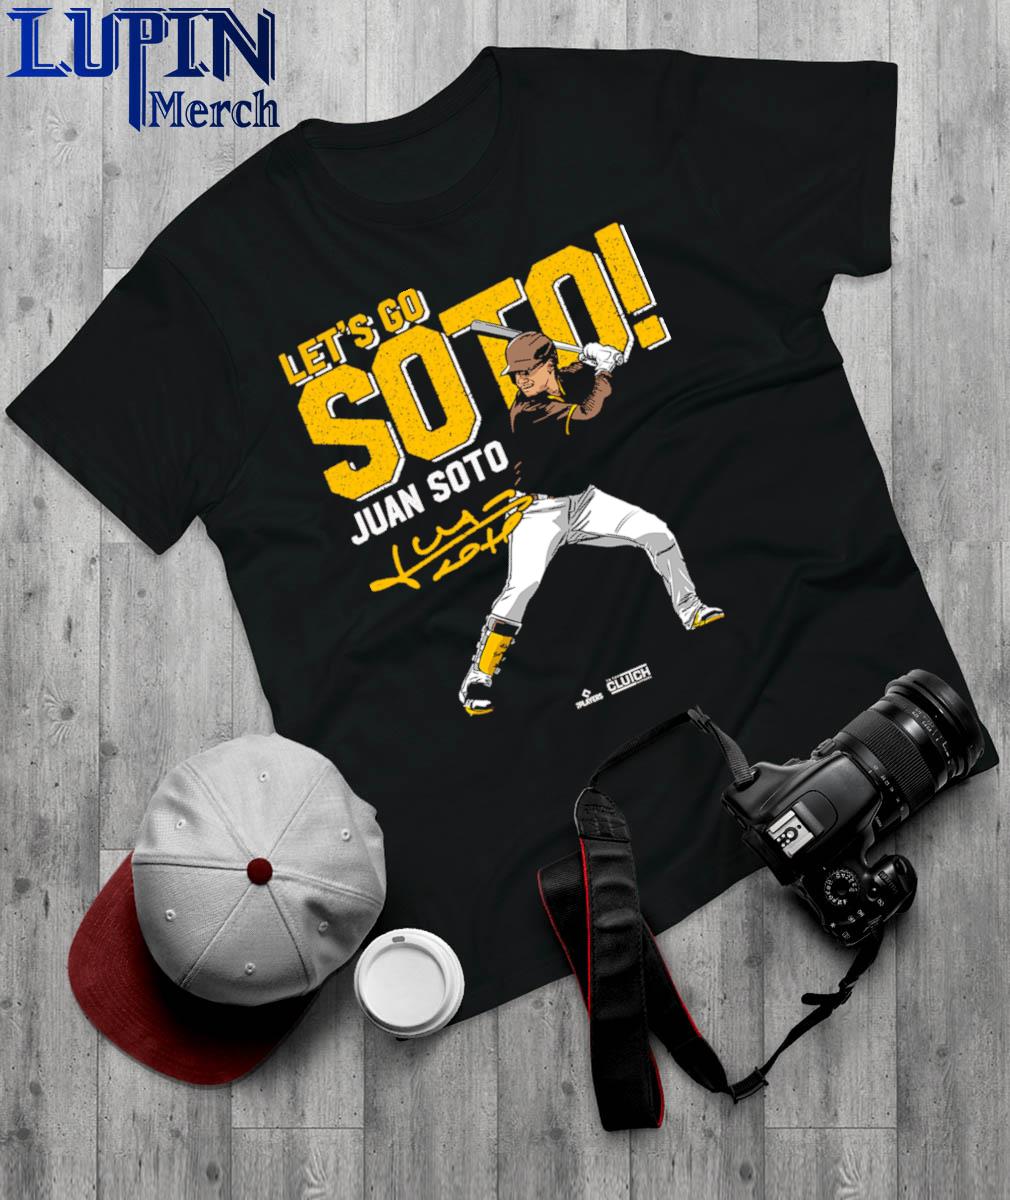 Official Let's go juan soto san diego baseball vintage shirt